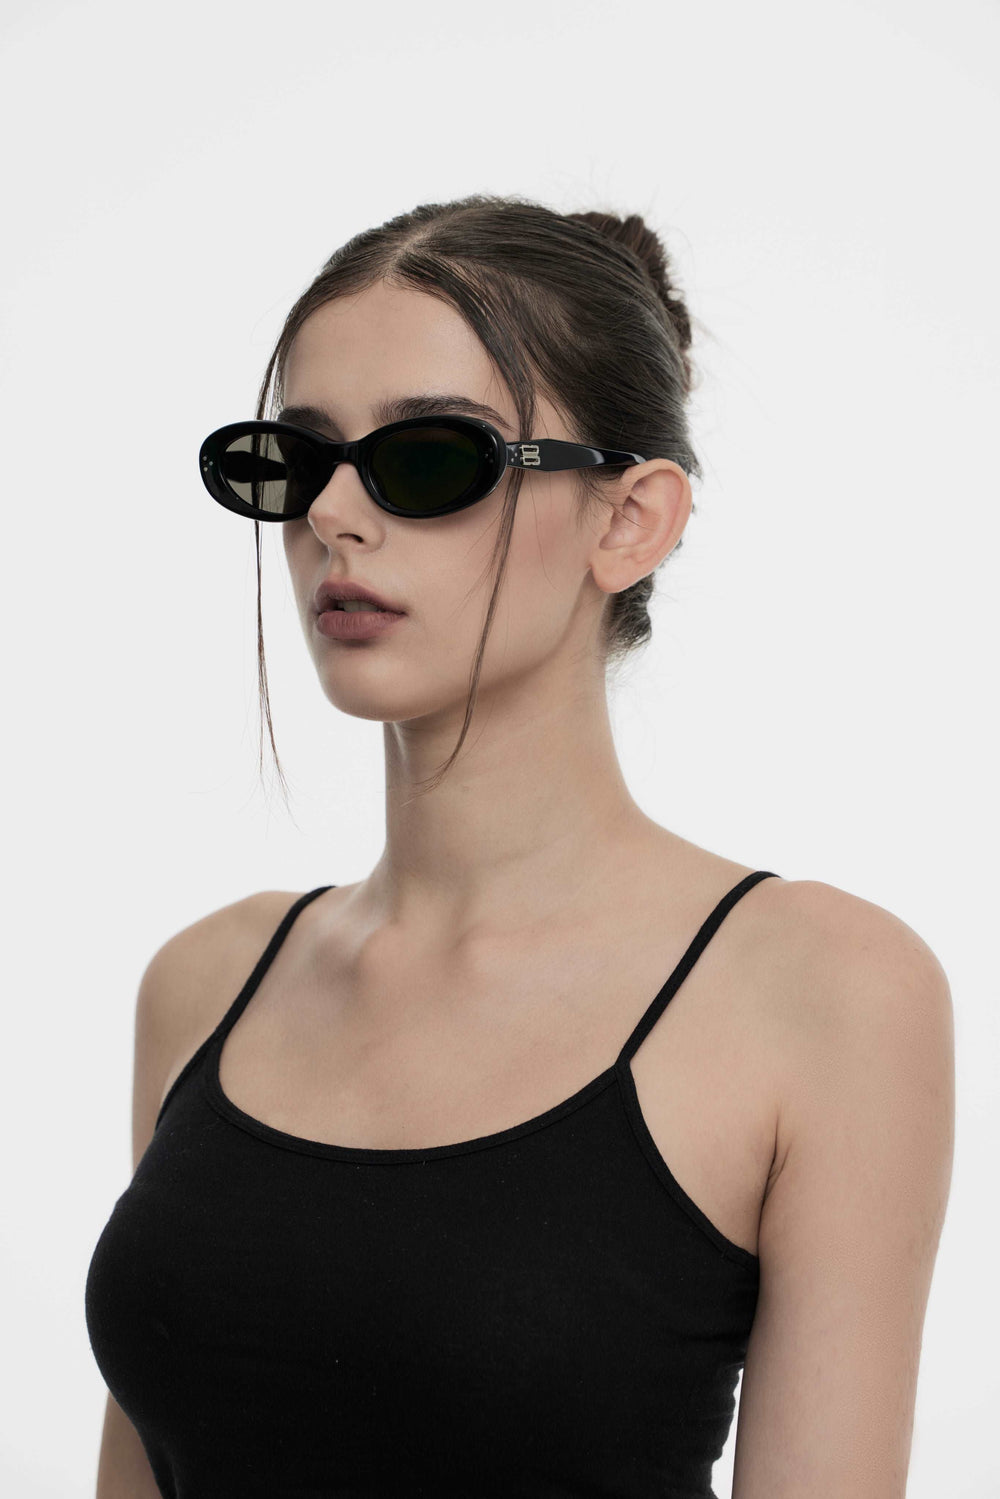 Model of her side face wearing Burr Puzzle’s Breath in black Kpop Sunglasses from Mercury Retrograde